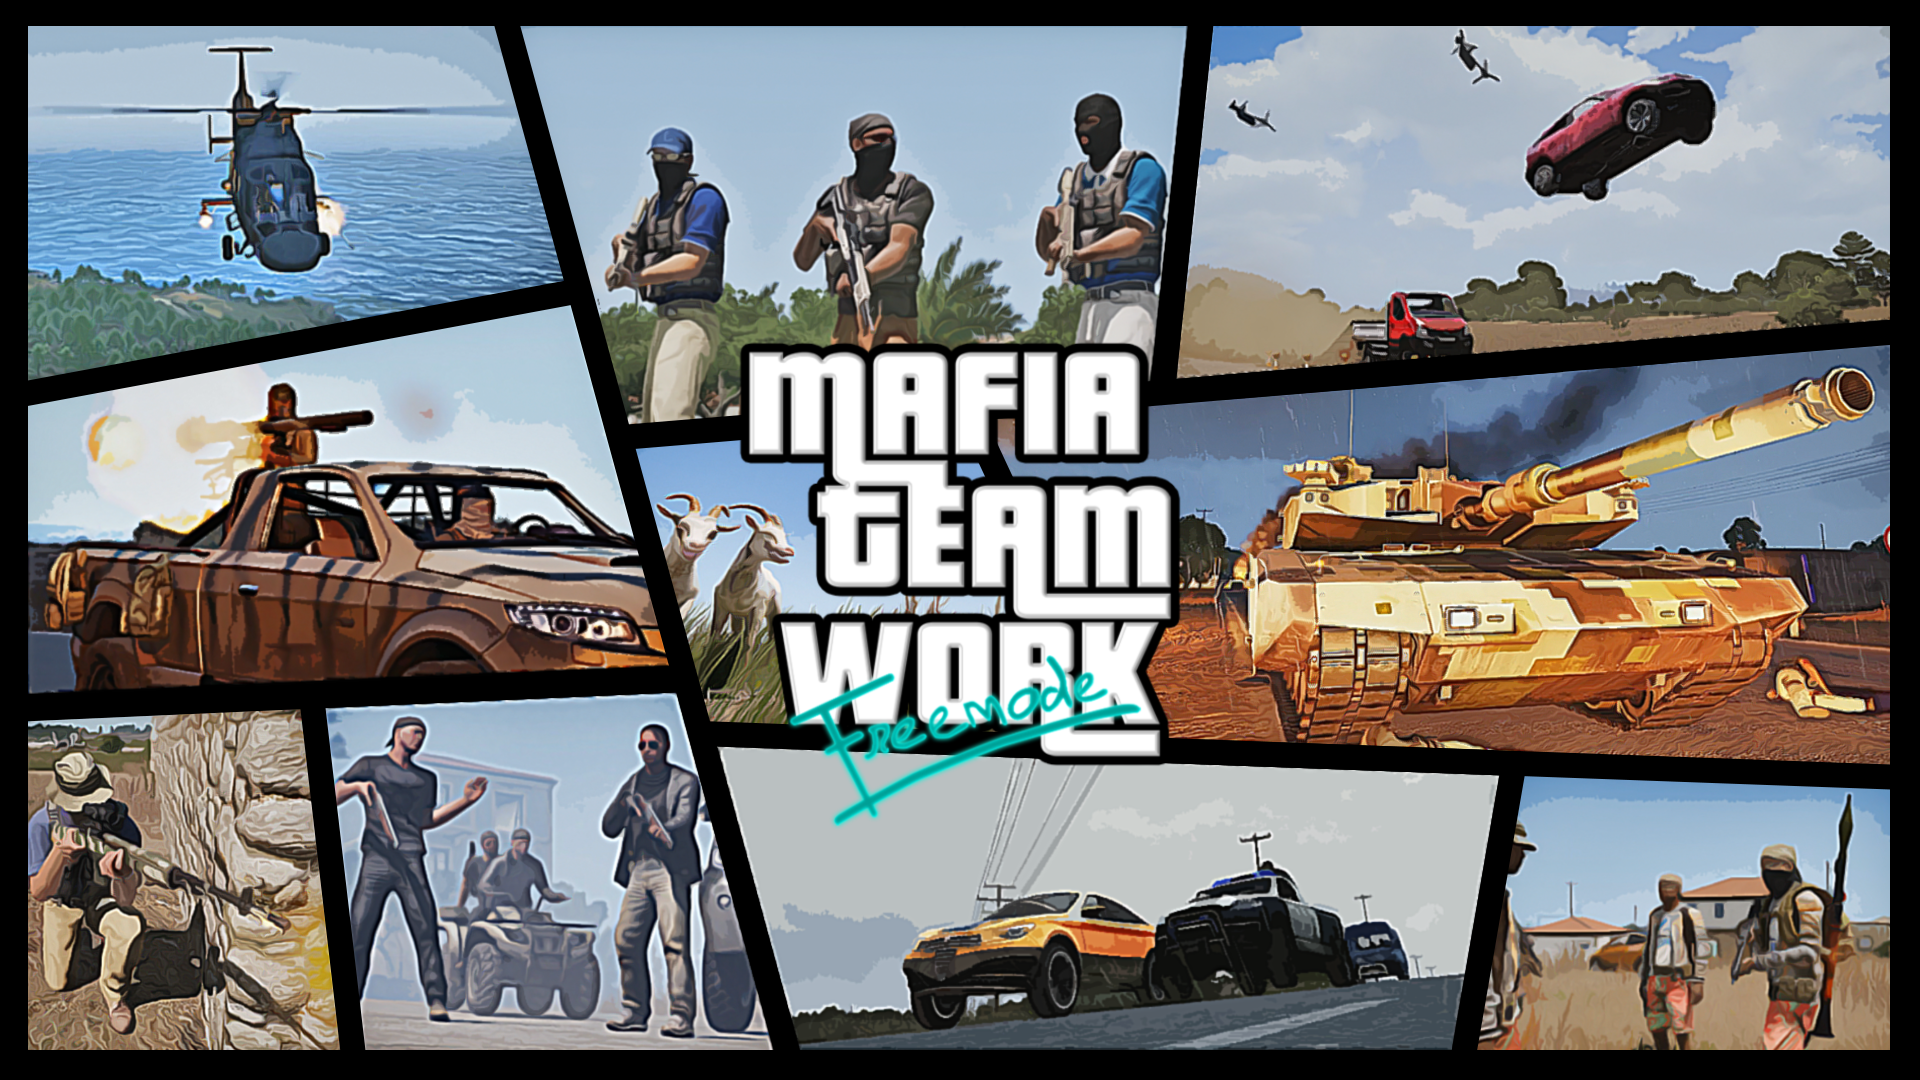 Mafia Team Work Freemode for ARMA 3 - ModDB